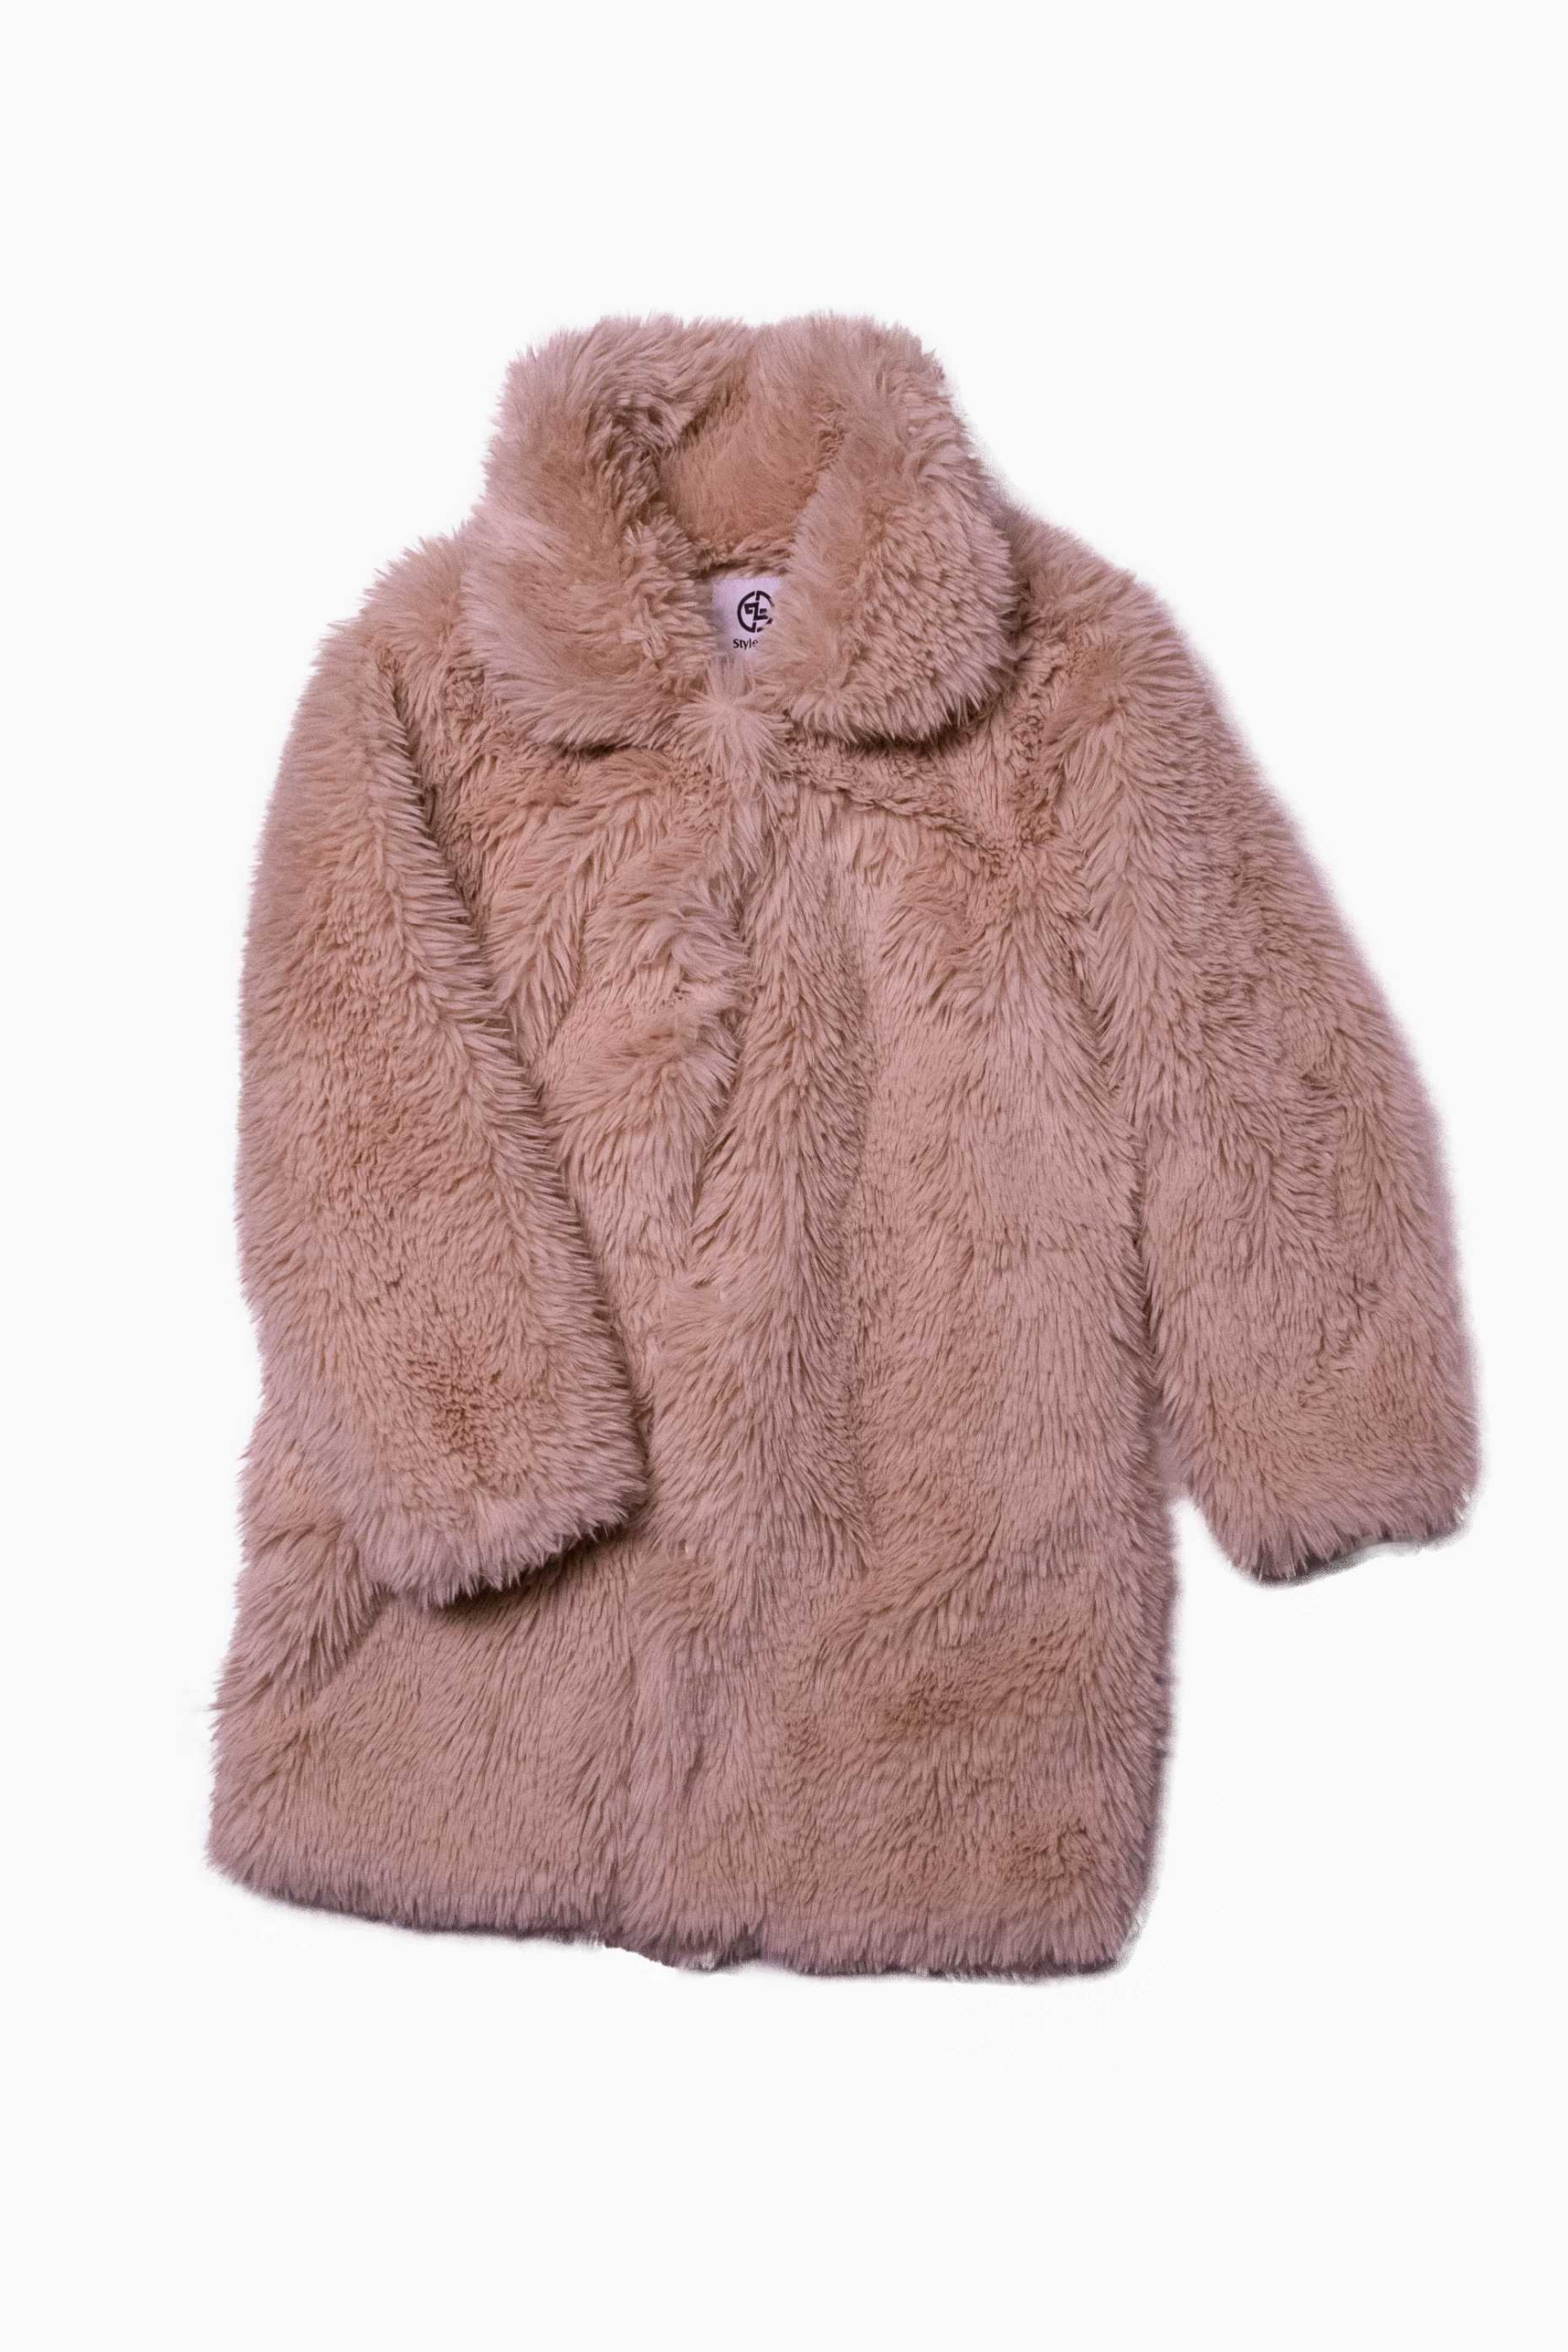 https://beautyloft.ca/wp-content/uploads/2021/01/Alpaca-Jackets-1-scaled.jpg